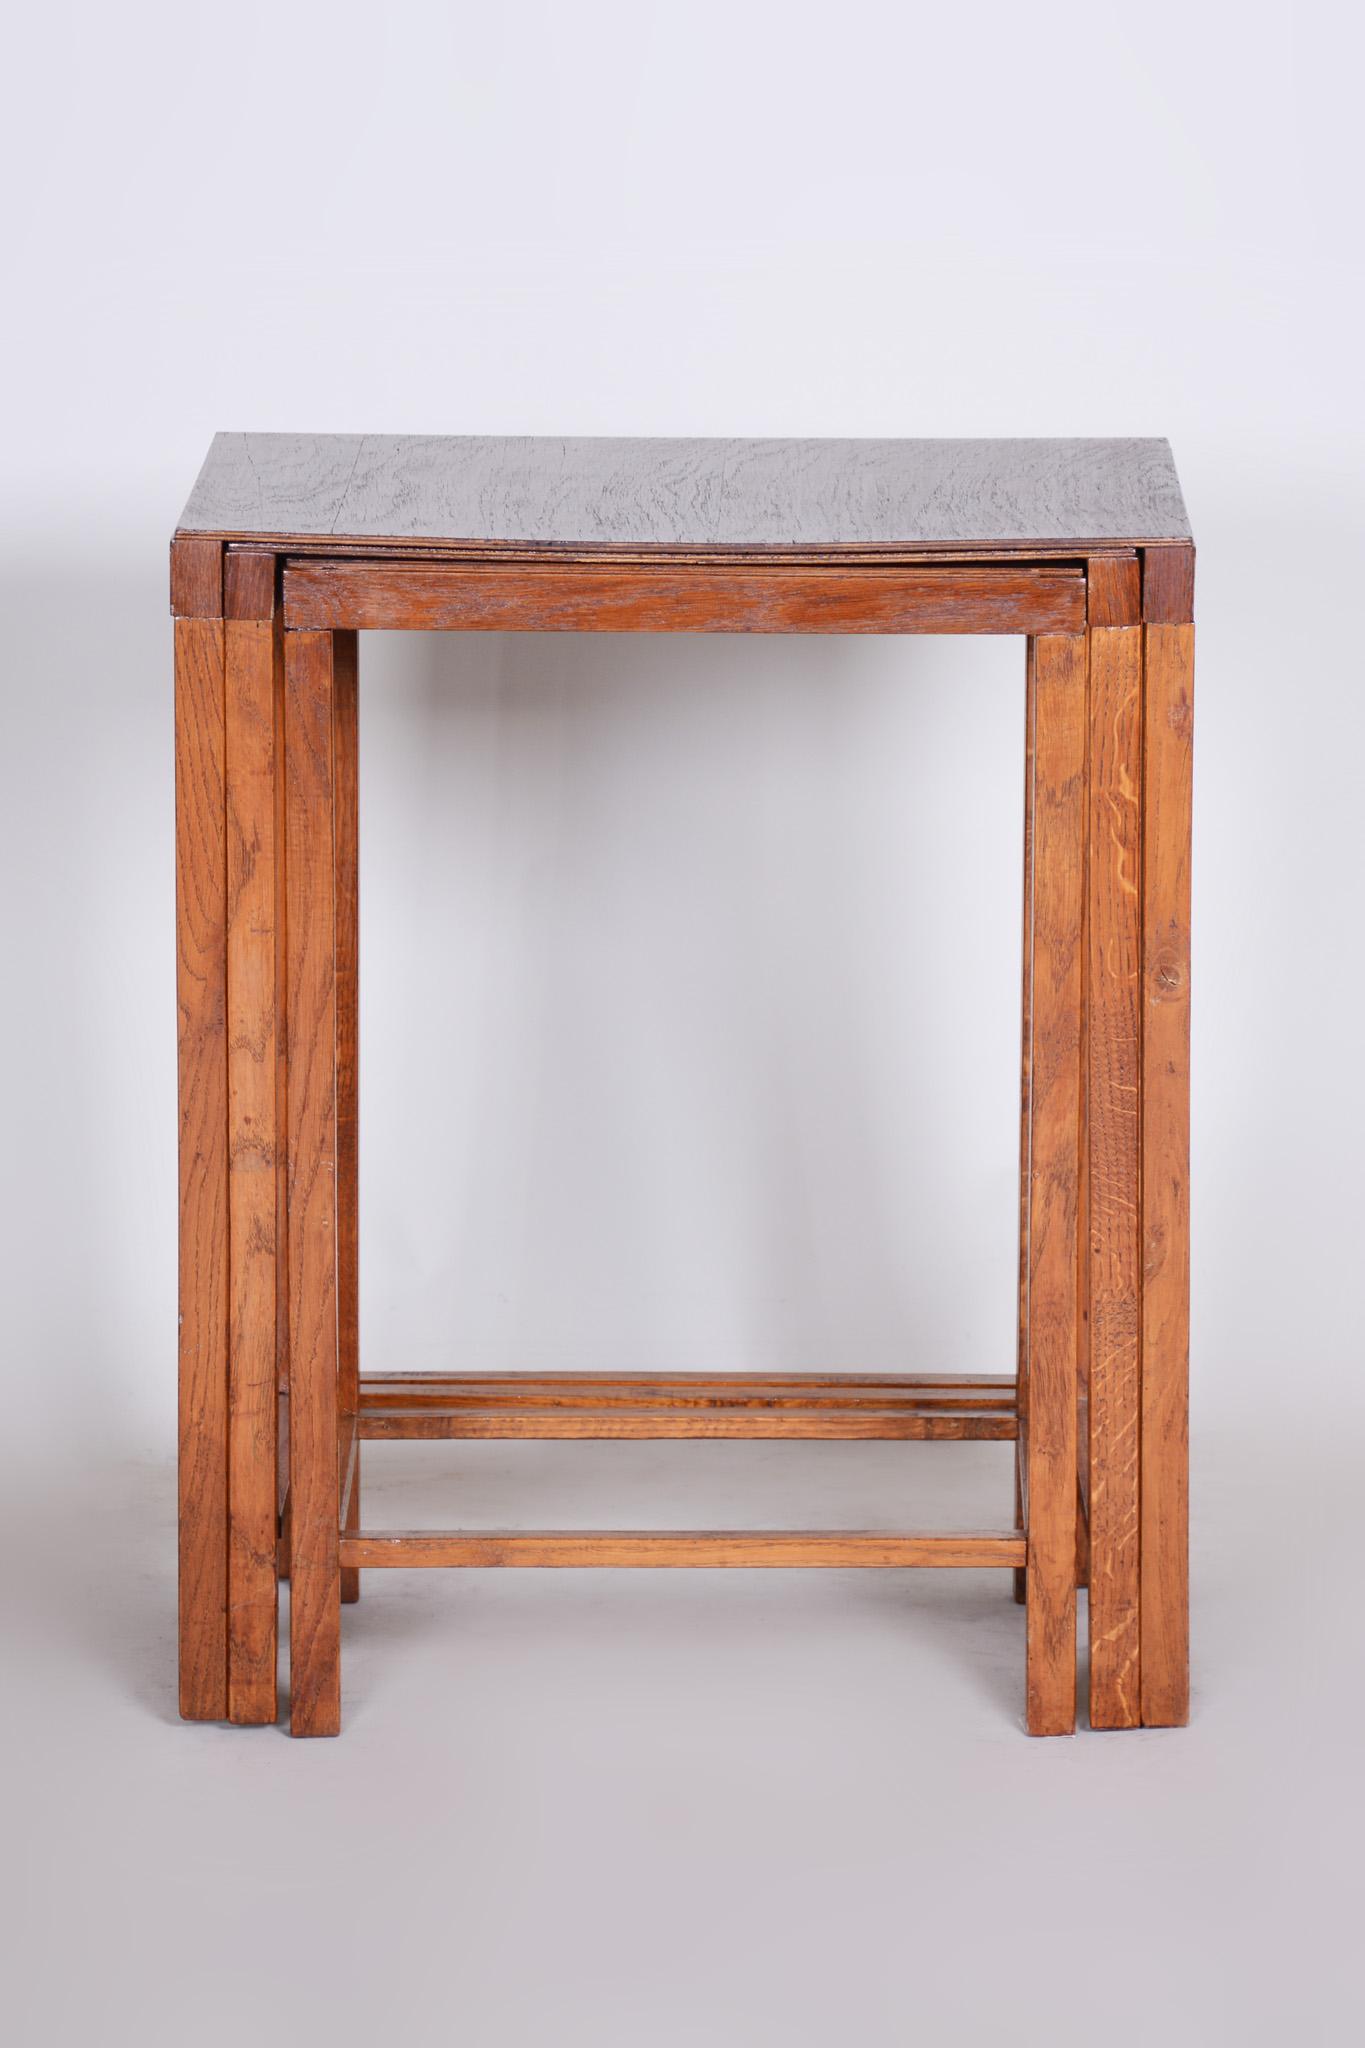 Brown Jan Vanek Nest Tables Made in 1930s Czechia, Art Deco  For Sale 3